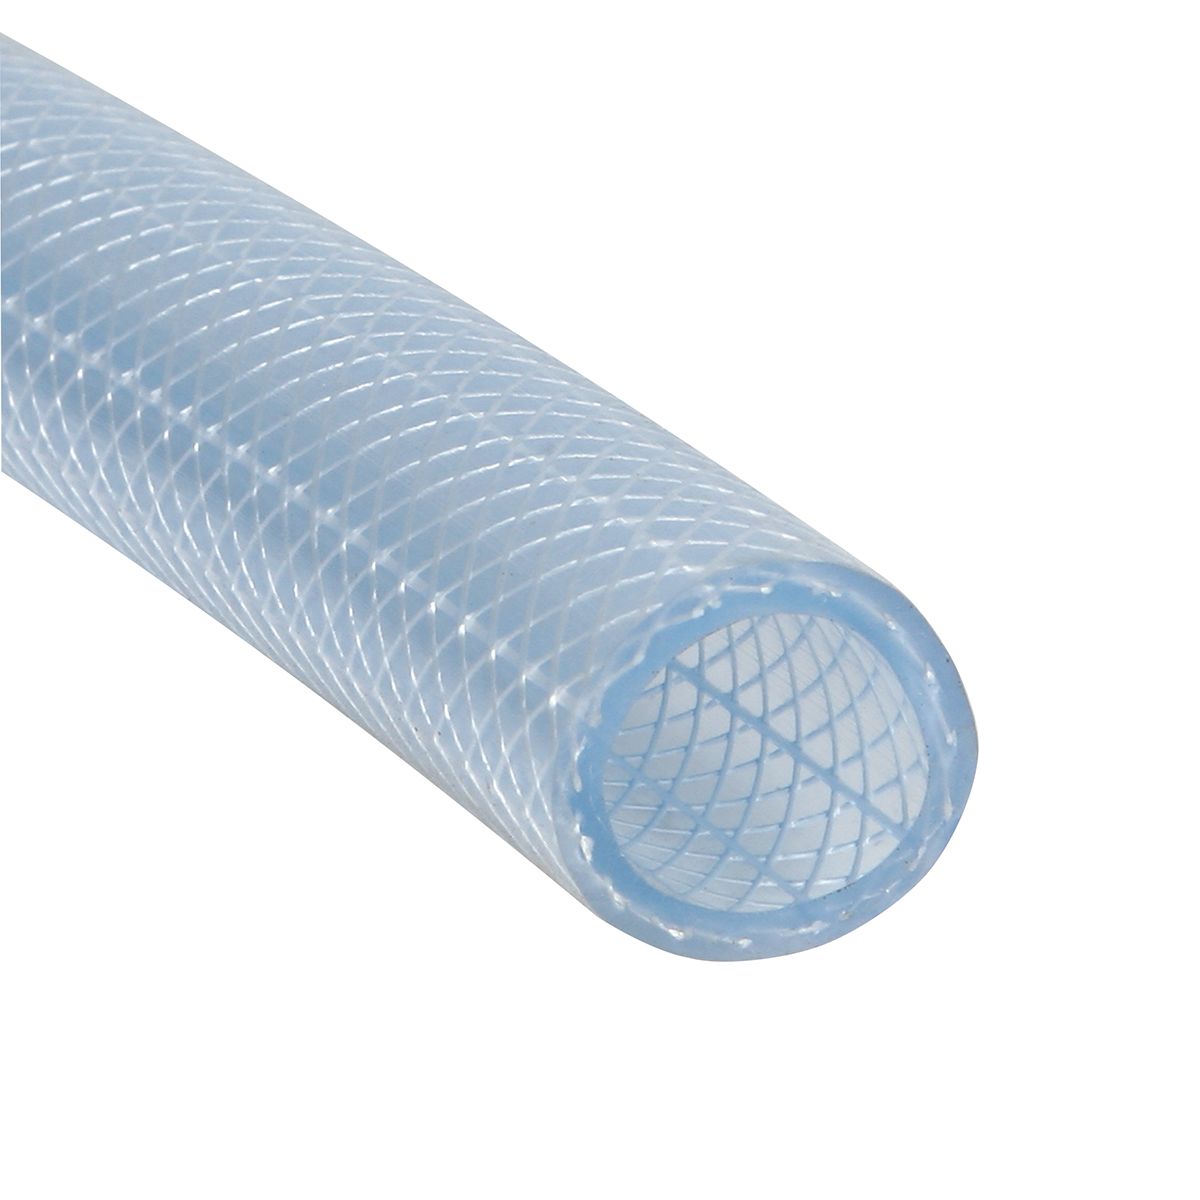 Hybrid PVC Hose Clear Vinyl Tubing Flexible PVC Tubing 25-Feet Length by 3/8 Inch ID Lightweight Plastic Tubing 